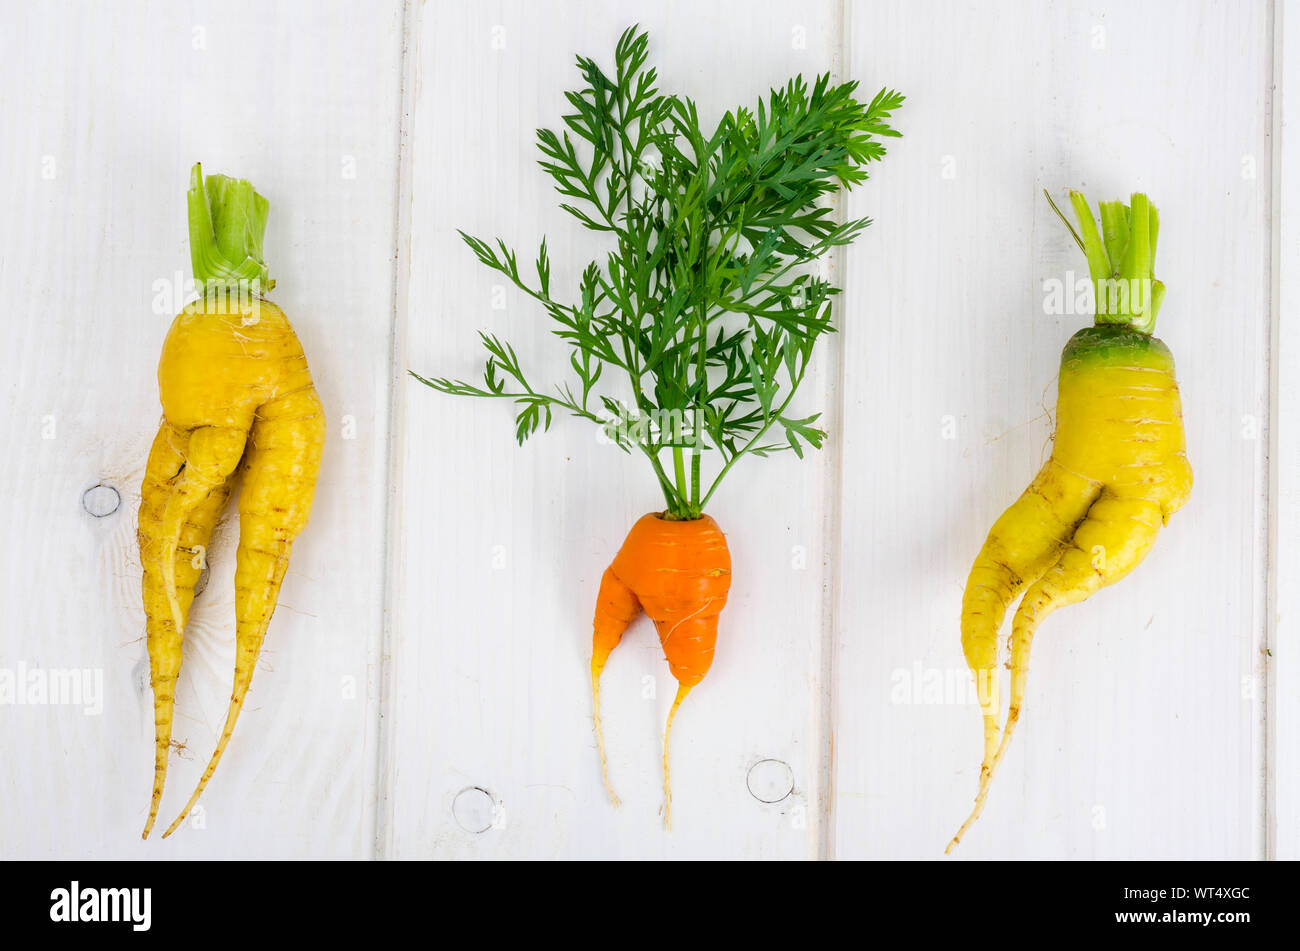 Ugly shaped vegetables, food. Deformed  fresh organic carrots. Misshapen produce. Studio Photo Stock Photo